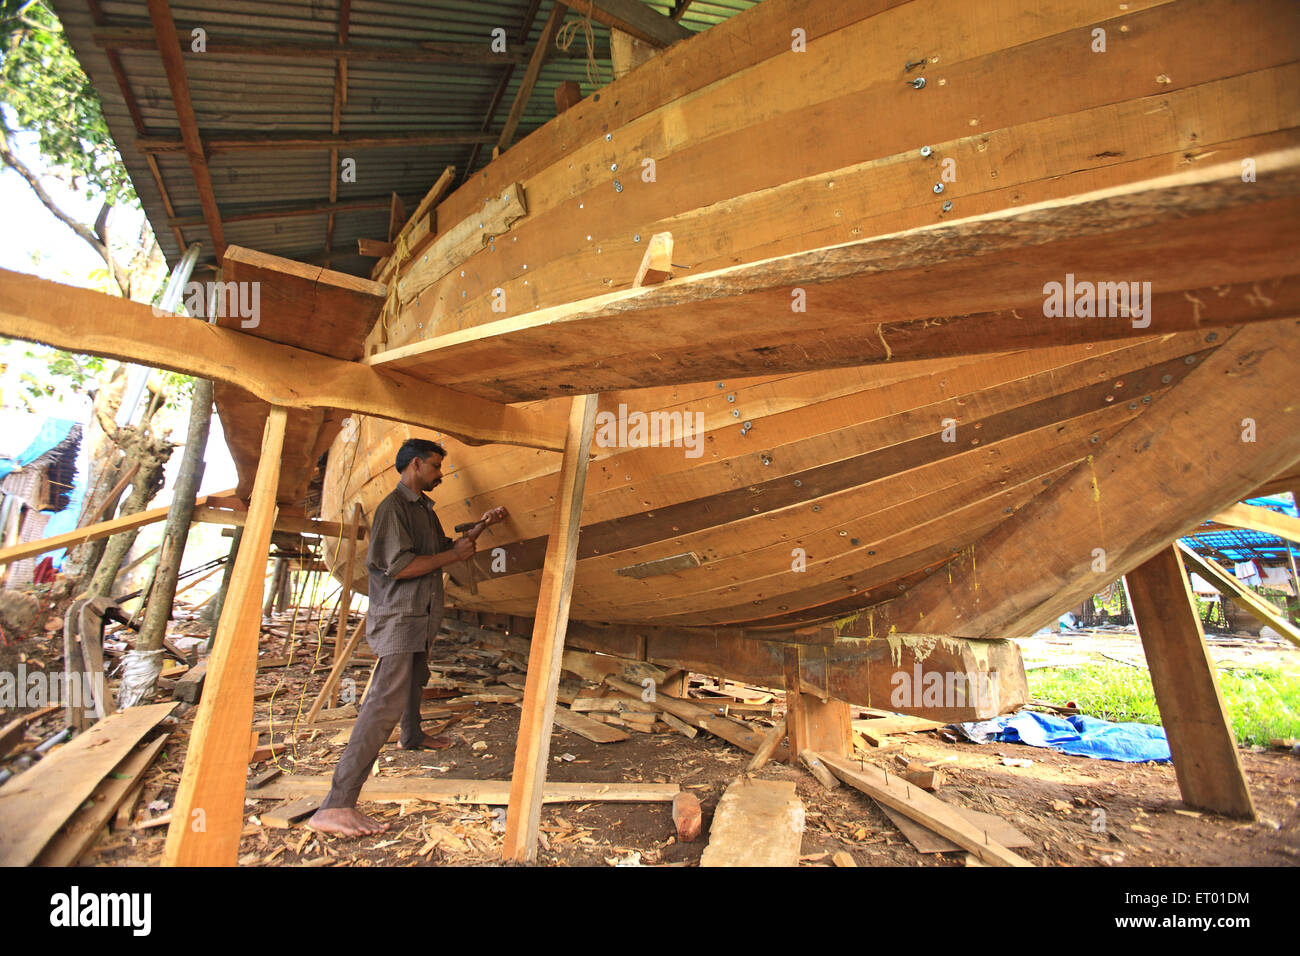 Holzbootbau, Alleppey, Alappuzha, Laccadive Sea, Kerala, Indien, Asien Stockfoto